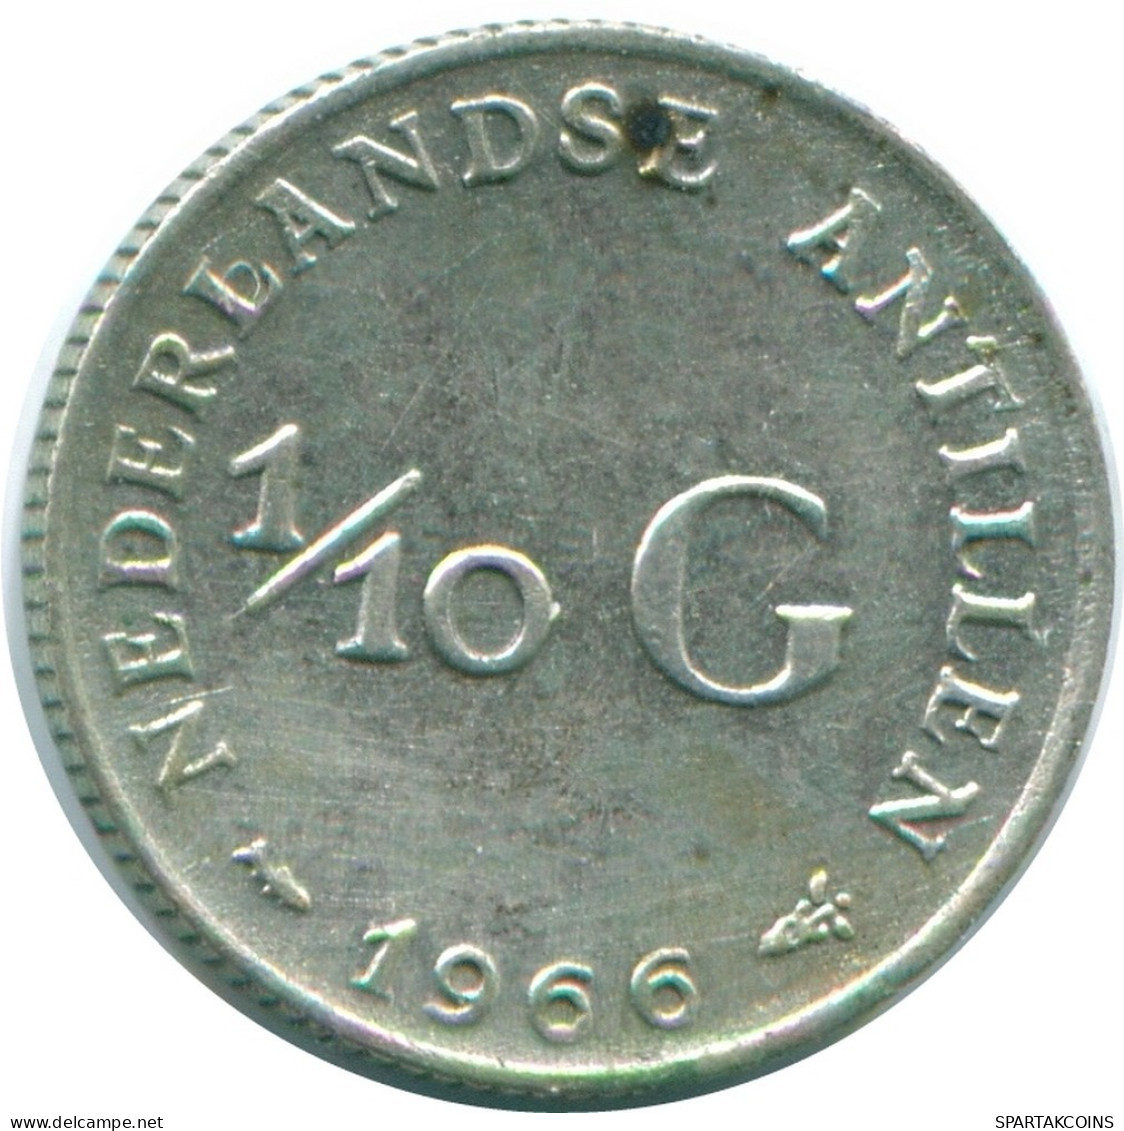 1/10 GULDEN 1966 NIEDERLÄNDISCHE ANTILLEN SILBER Koloniale Münze #NL12764.3.D.A - Netherlands Antilles